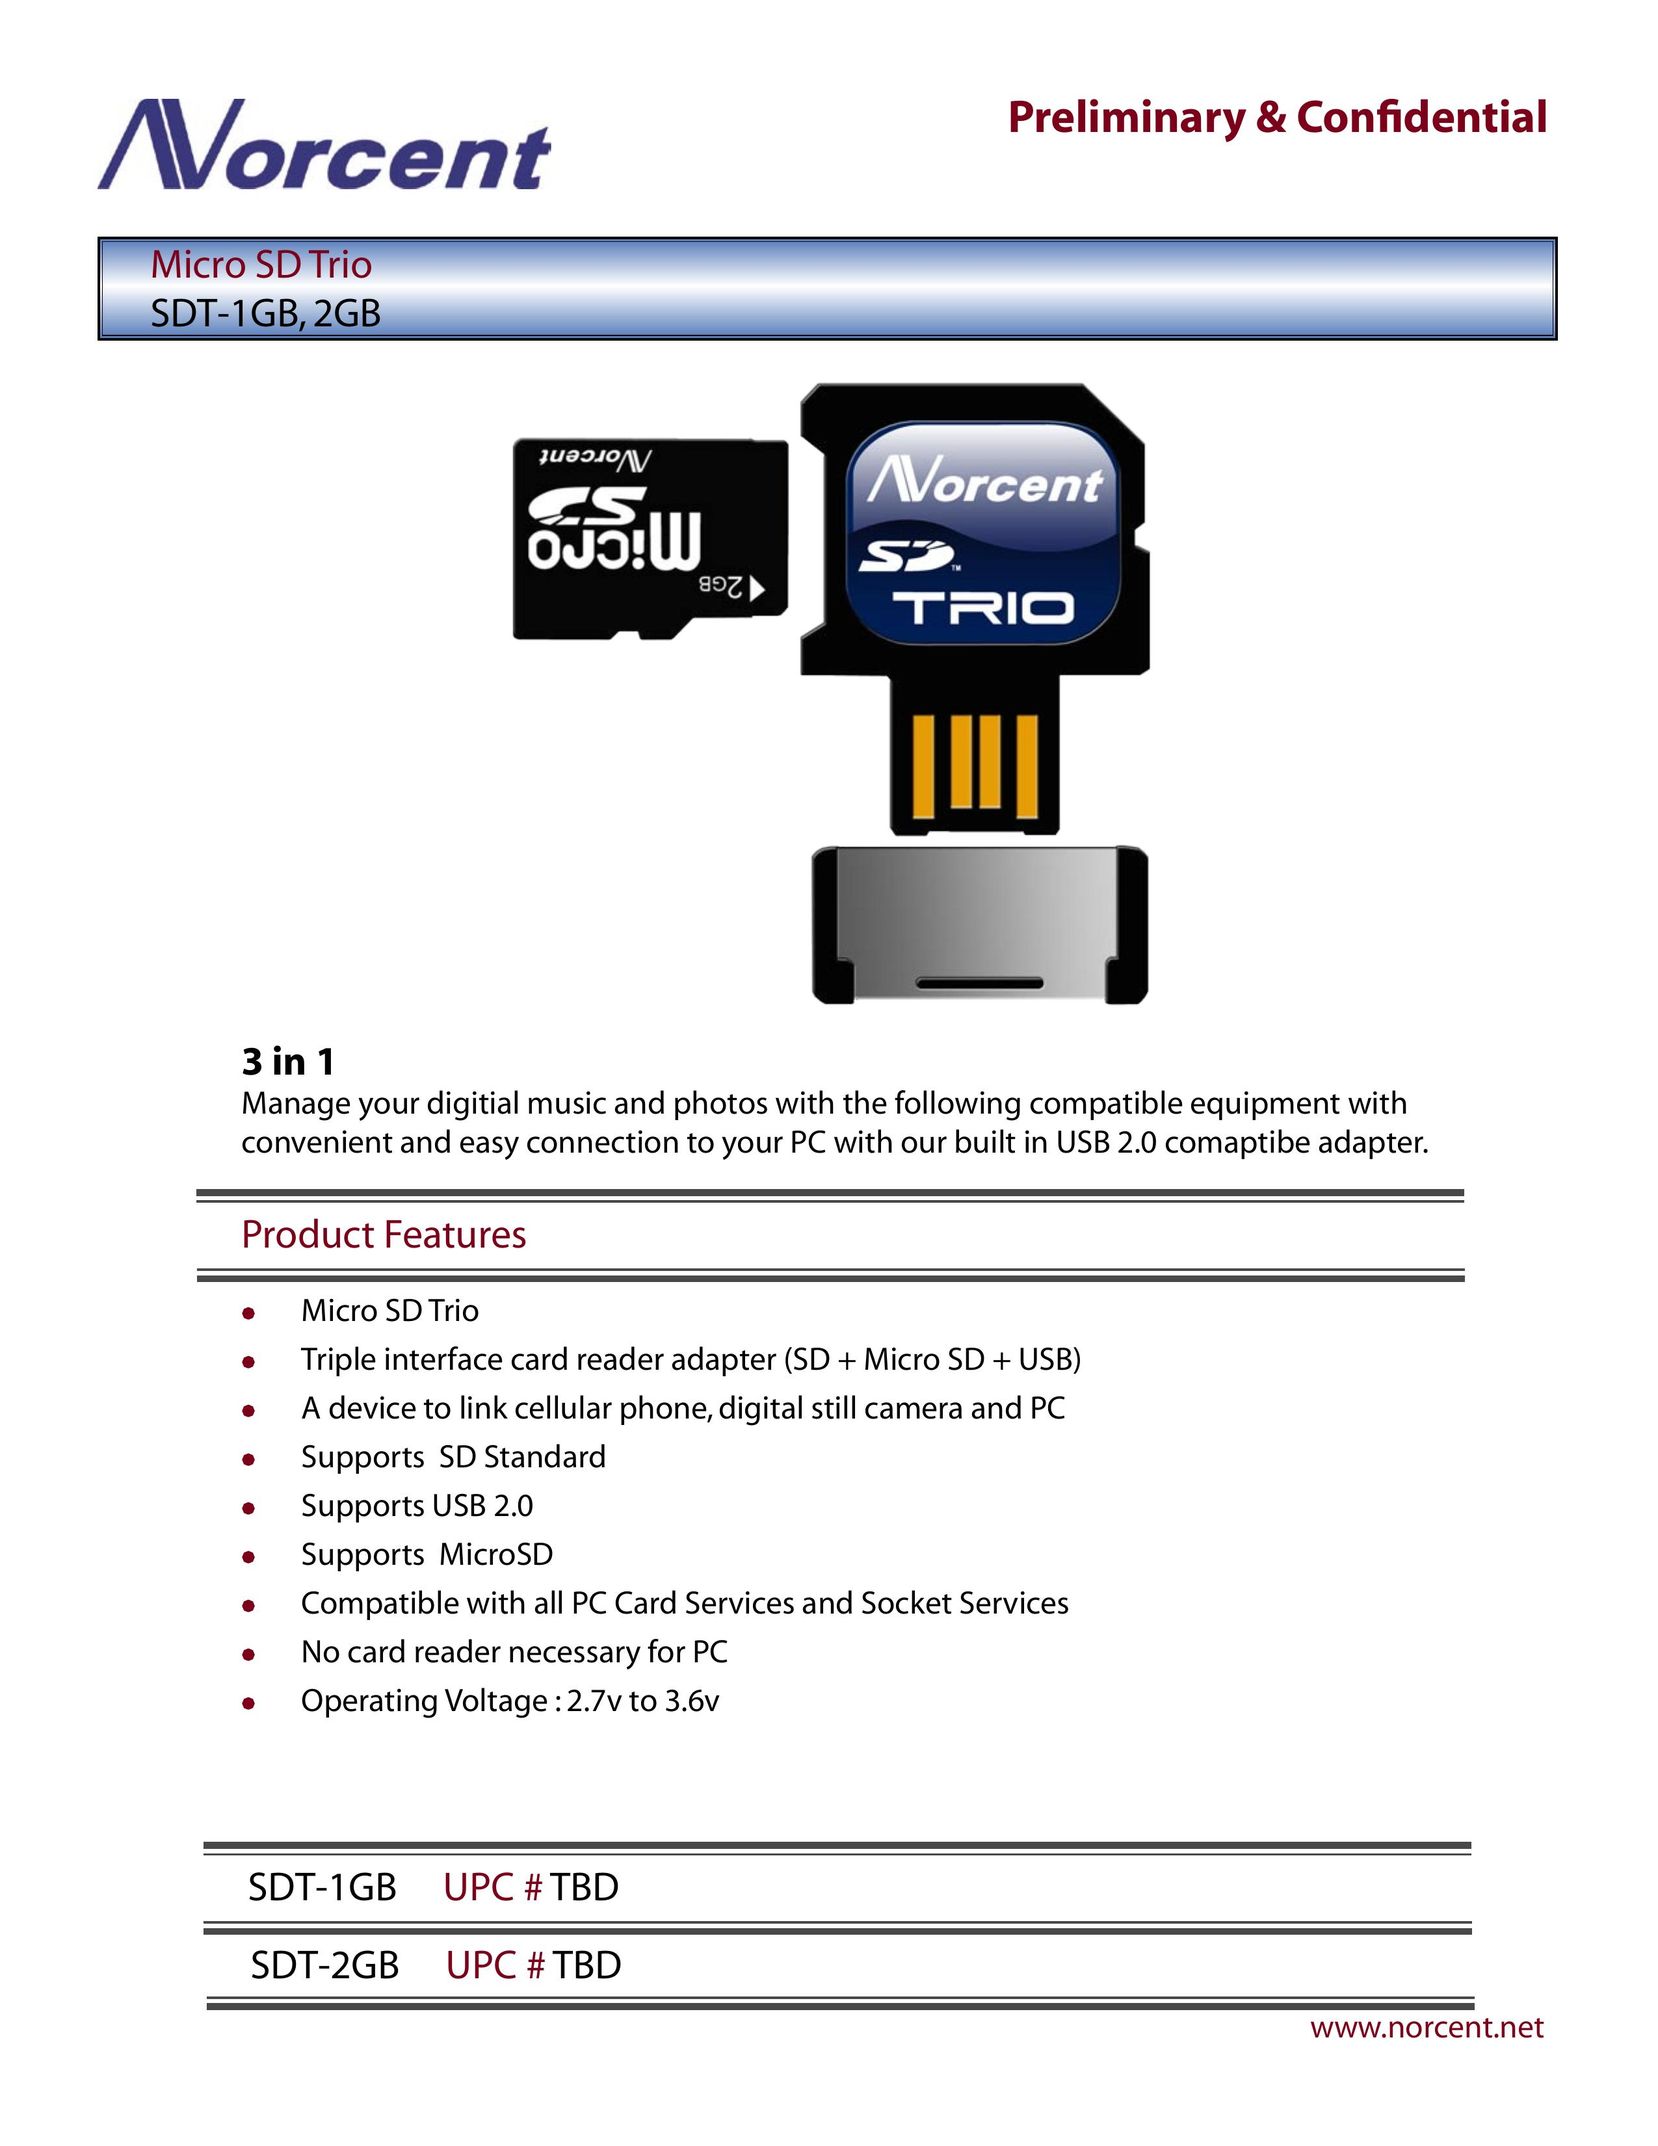 Norcent Technologies SDT-2GB UPC # TBD Computer Drive User Manual